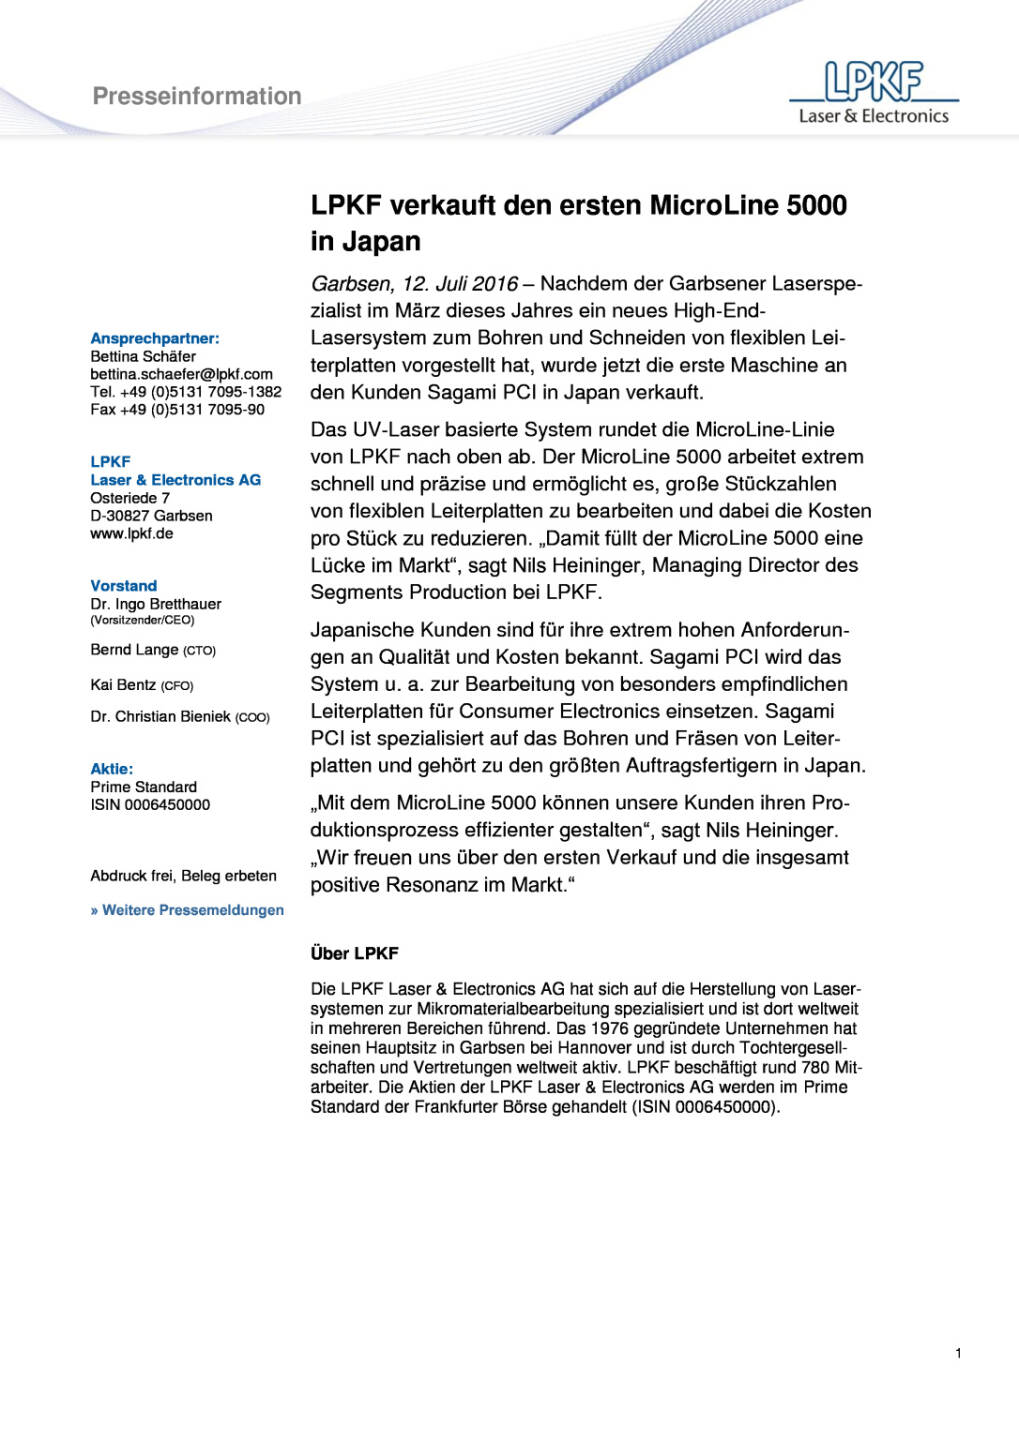 LPKF verkauft den ersten MicroLine 5000 in Japan, Seite 1/1, komplettes Dokument unter http://boerse-social.com/static/uploads/file_1389_lpkf_verkauft_den_ersten_microline_5000_in_japan.pdf